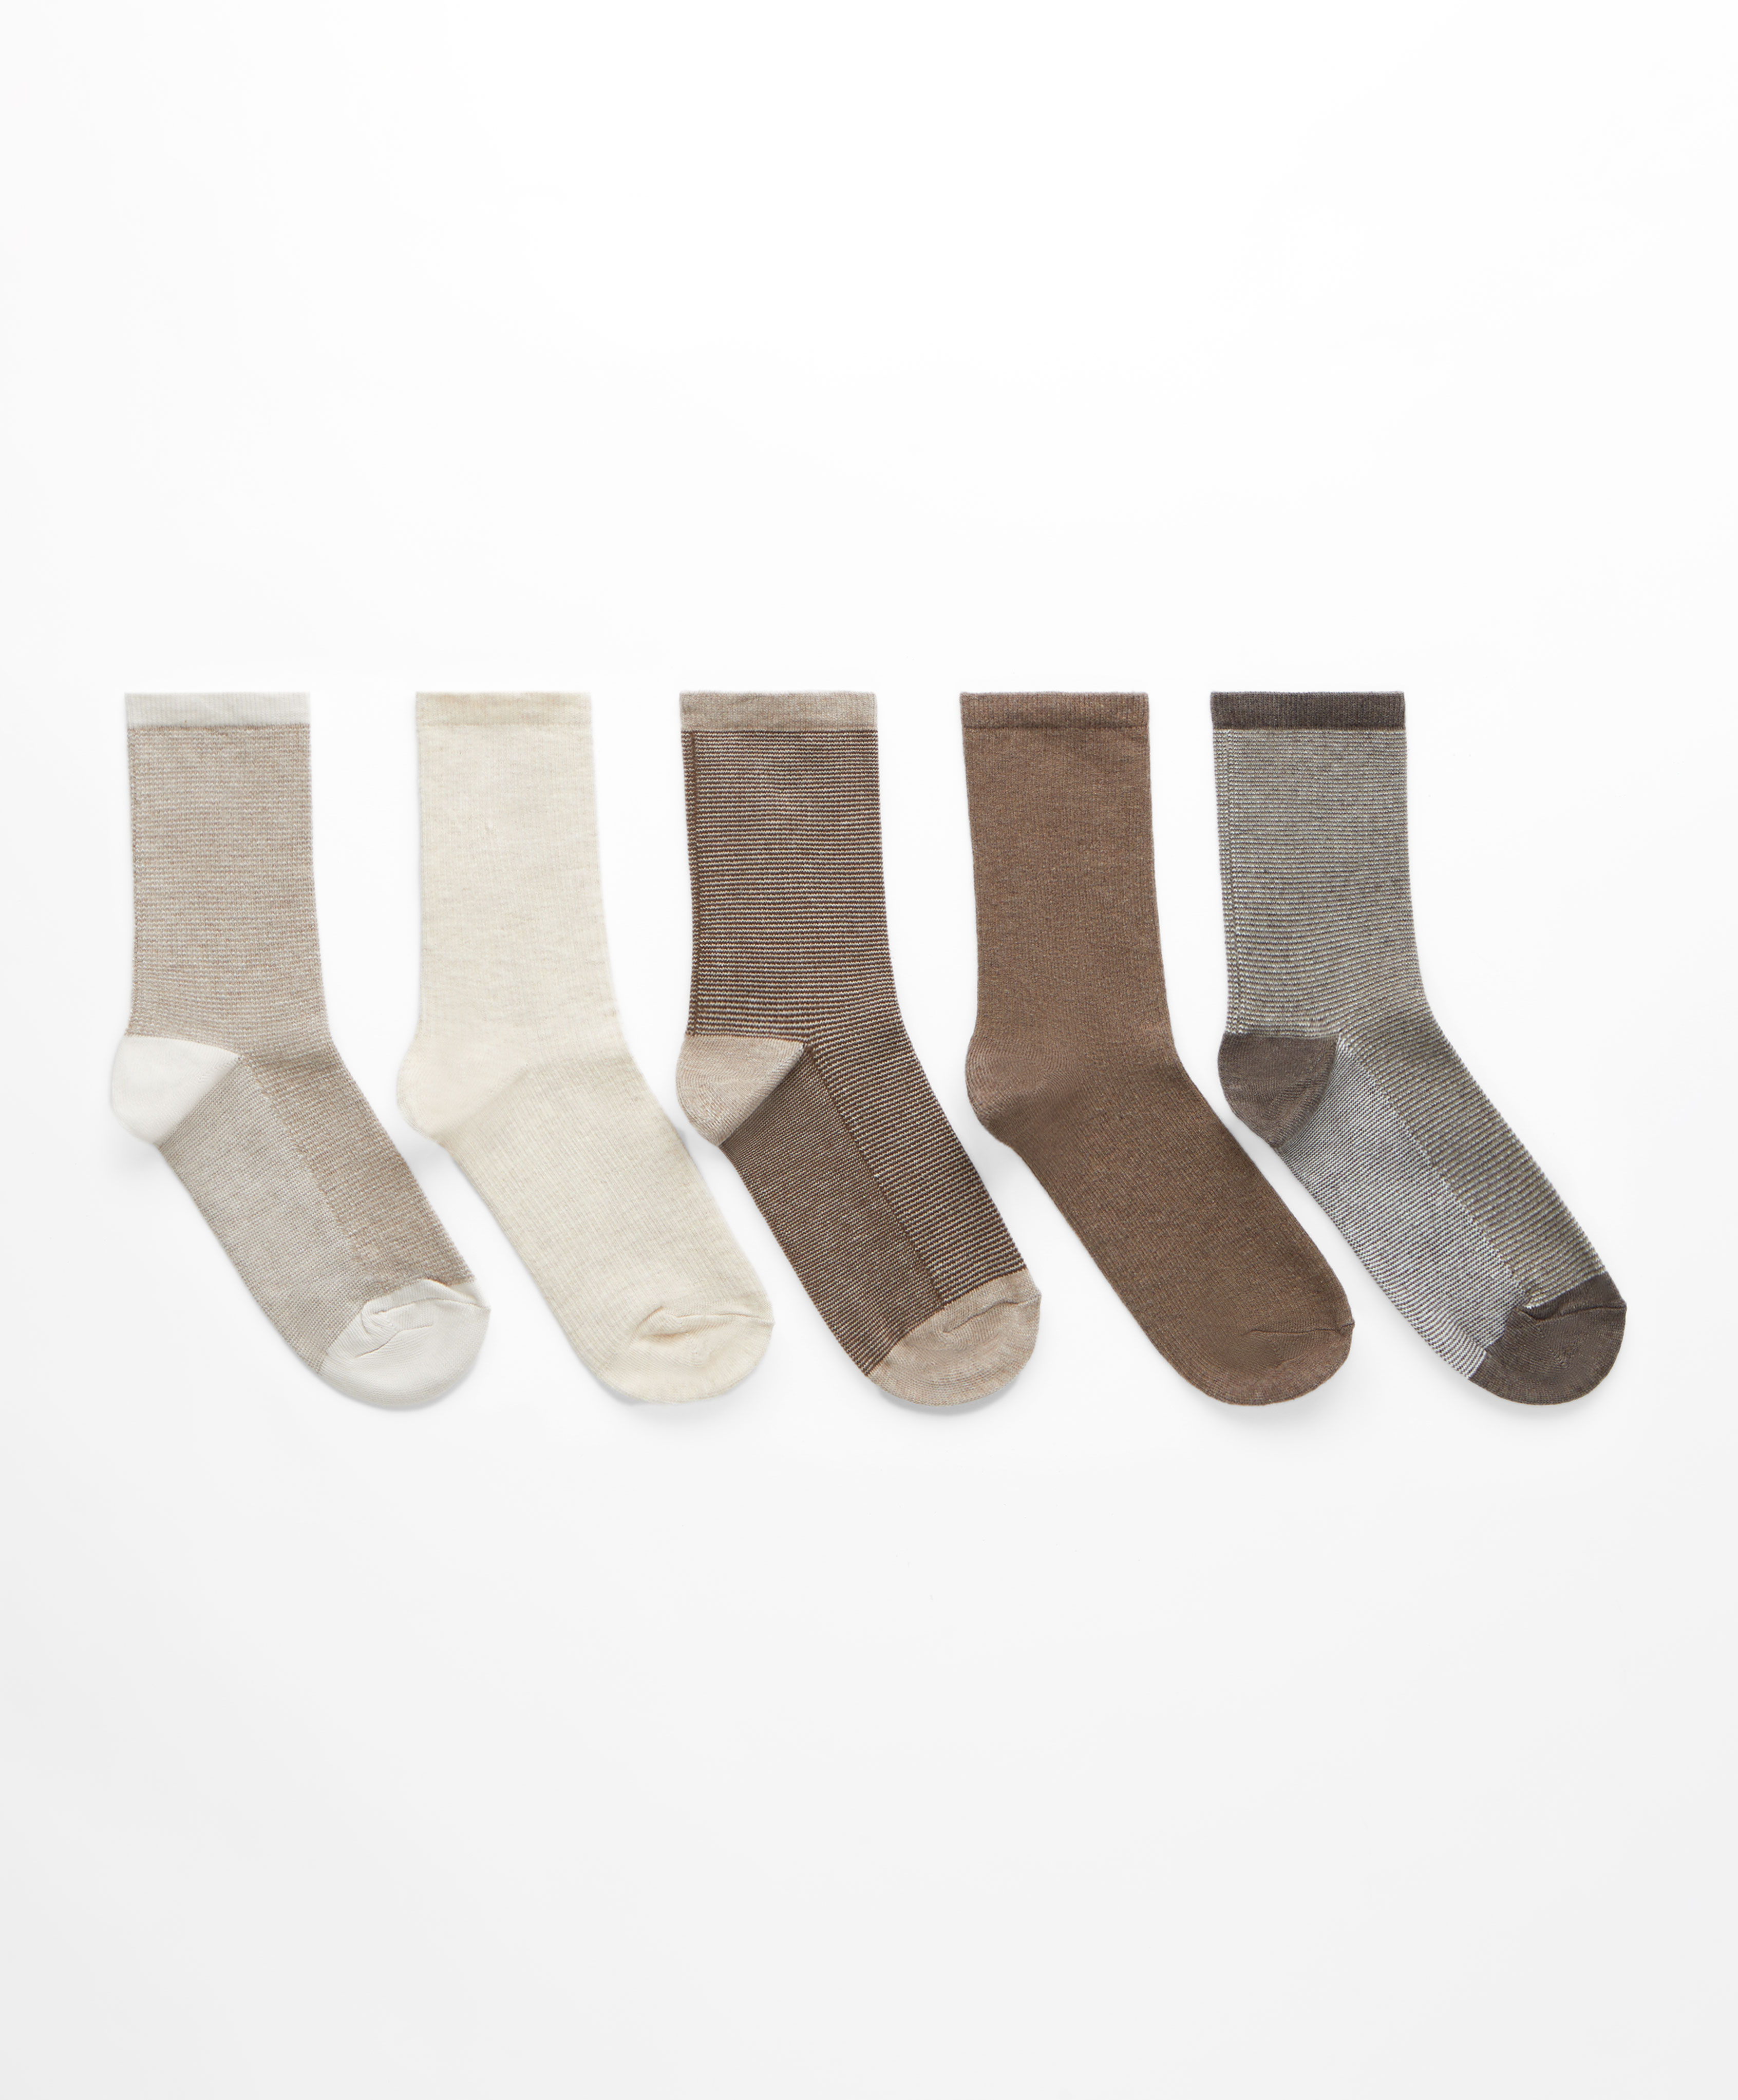 5 pairs of fantasy textured classic socks